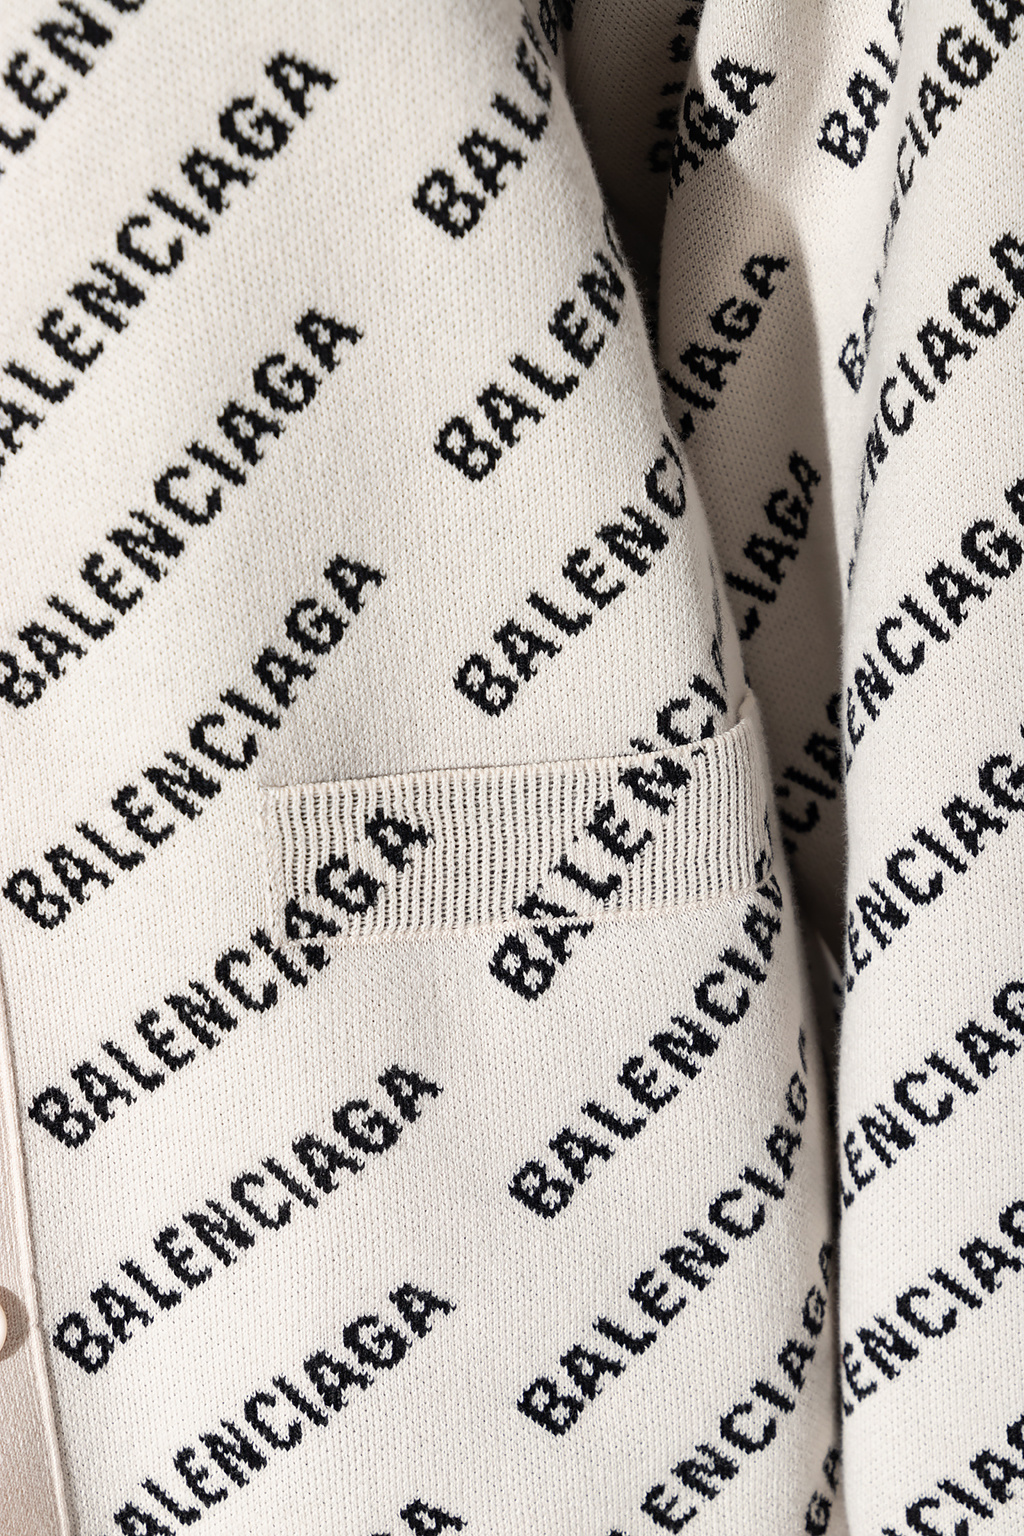 Balenciaga clothing footwear-accessories lighters eyewear 44-5 cups